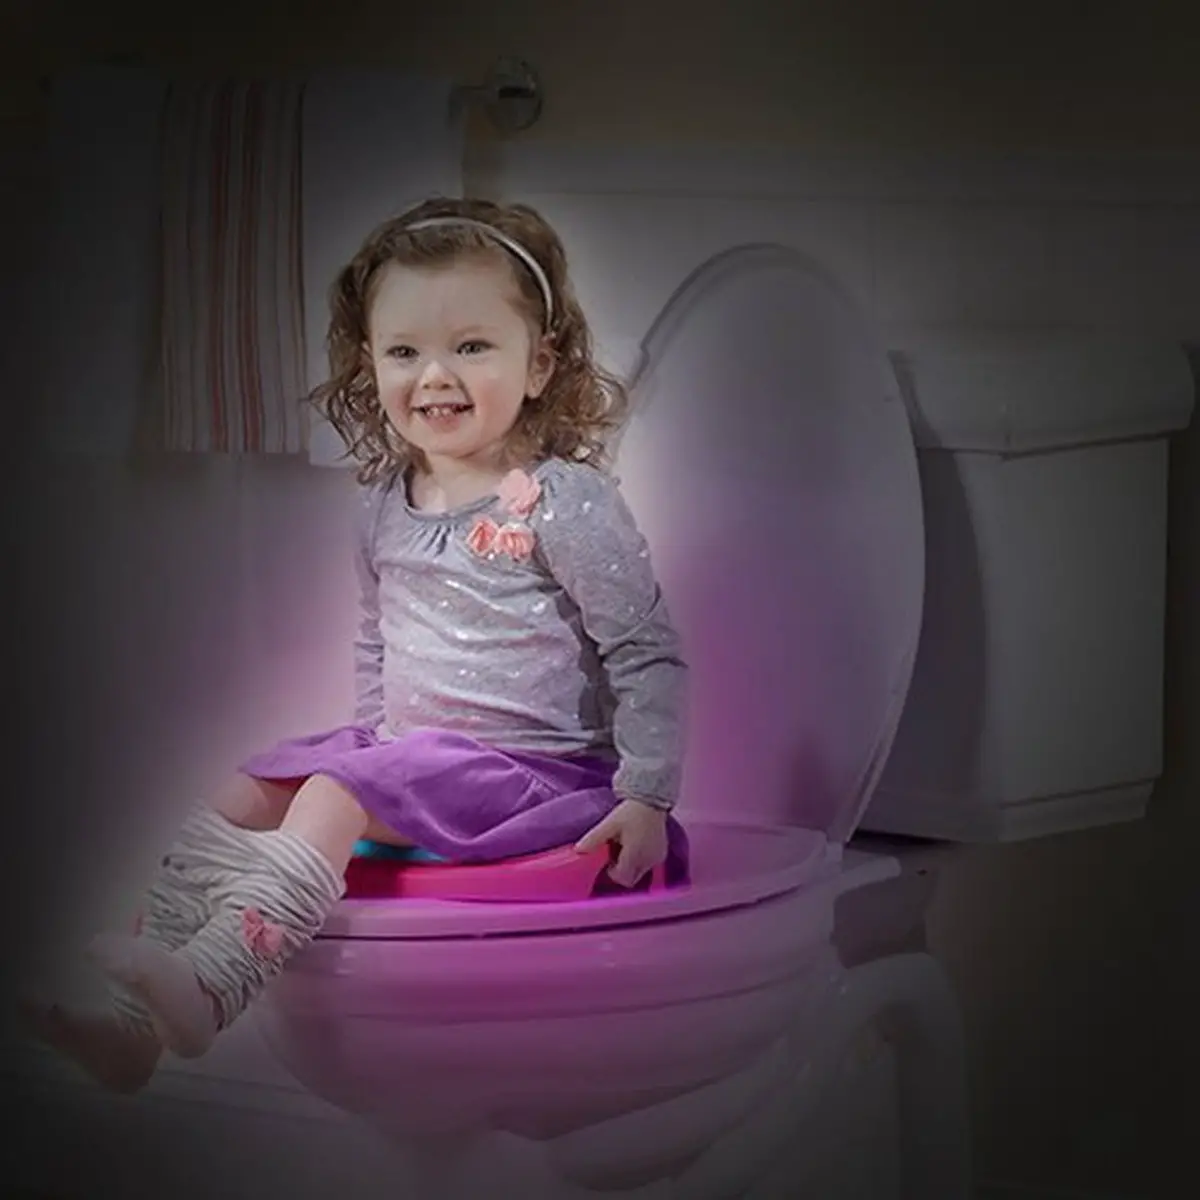 Domini Toilet Bowl Night Light | Get These Tech Gadgets Via Amazon Prime